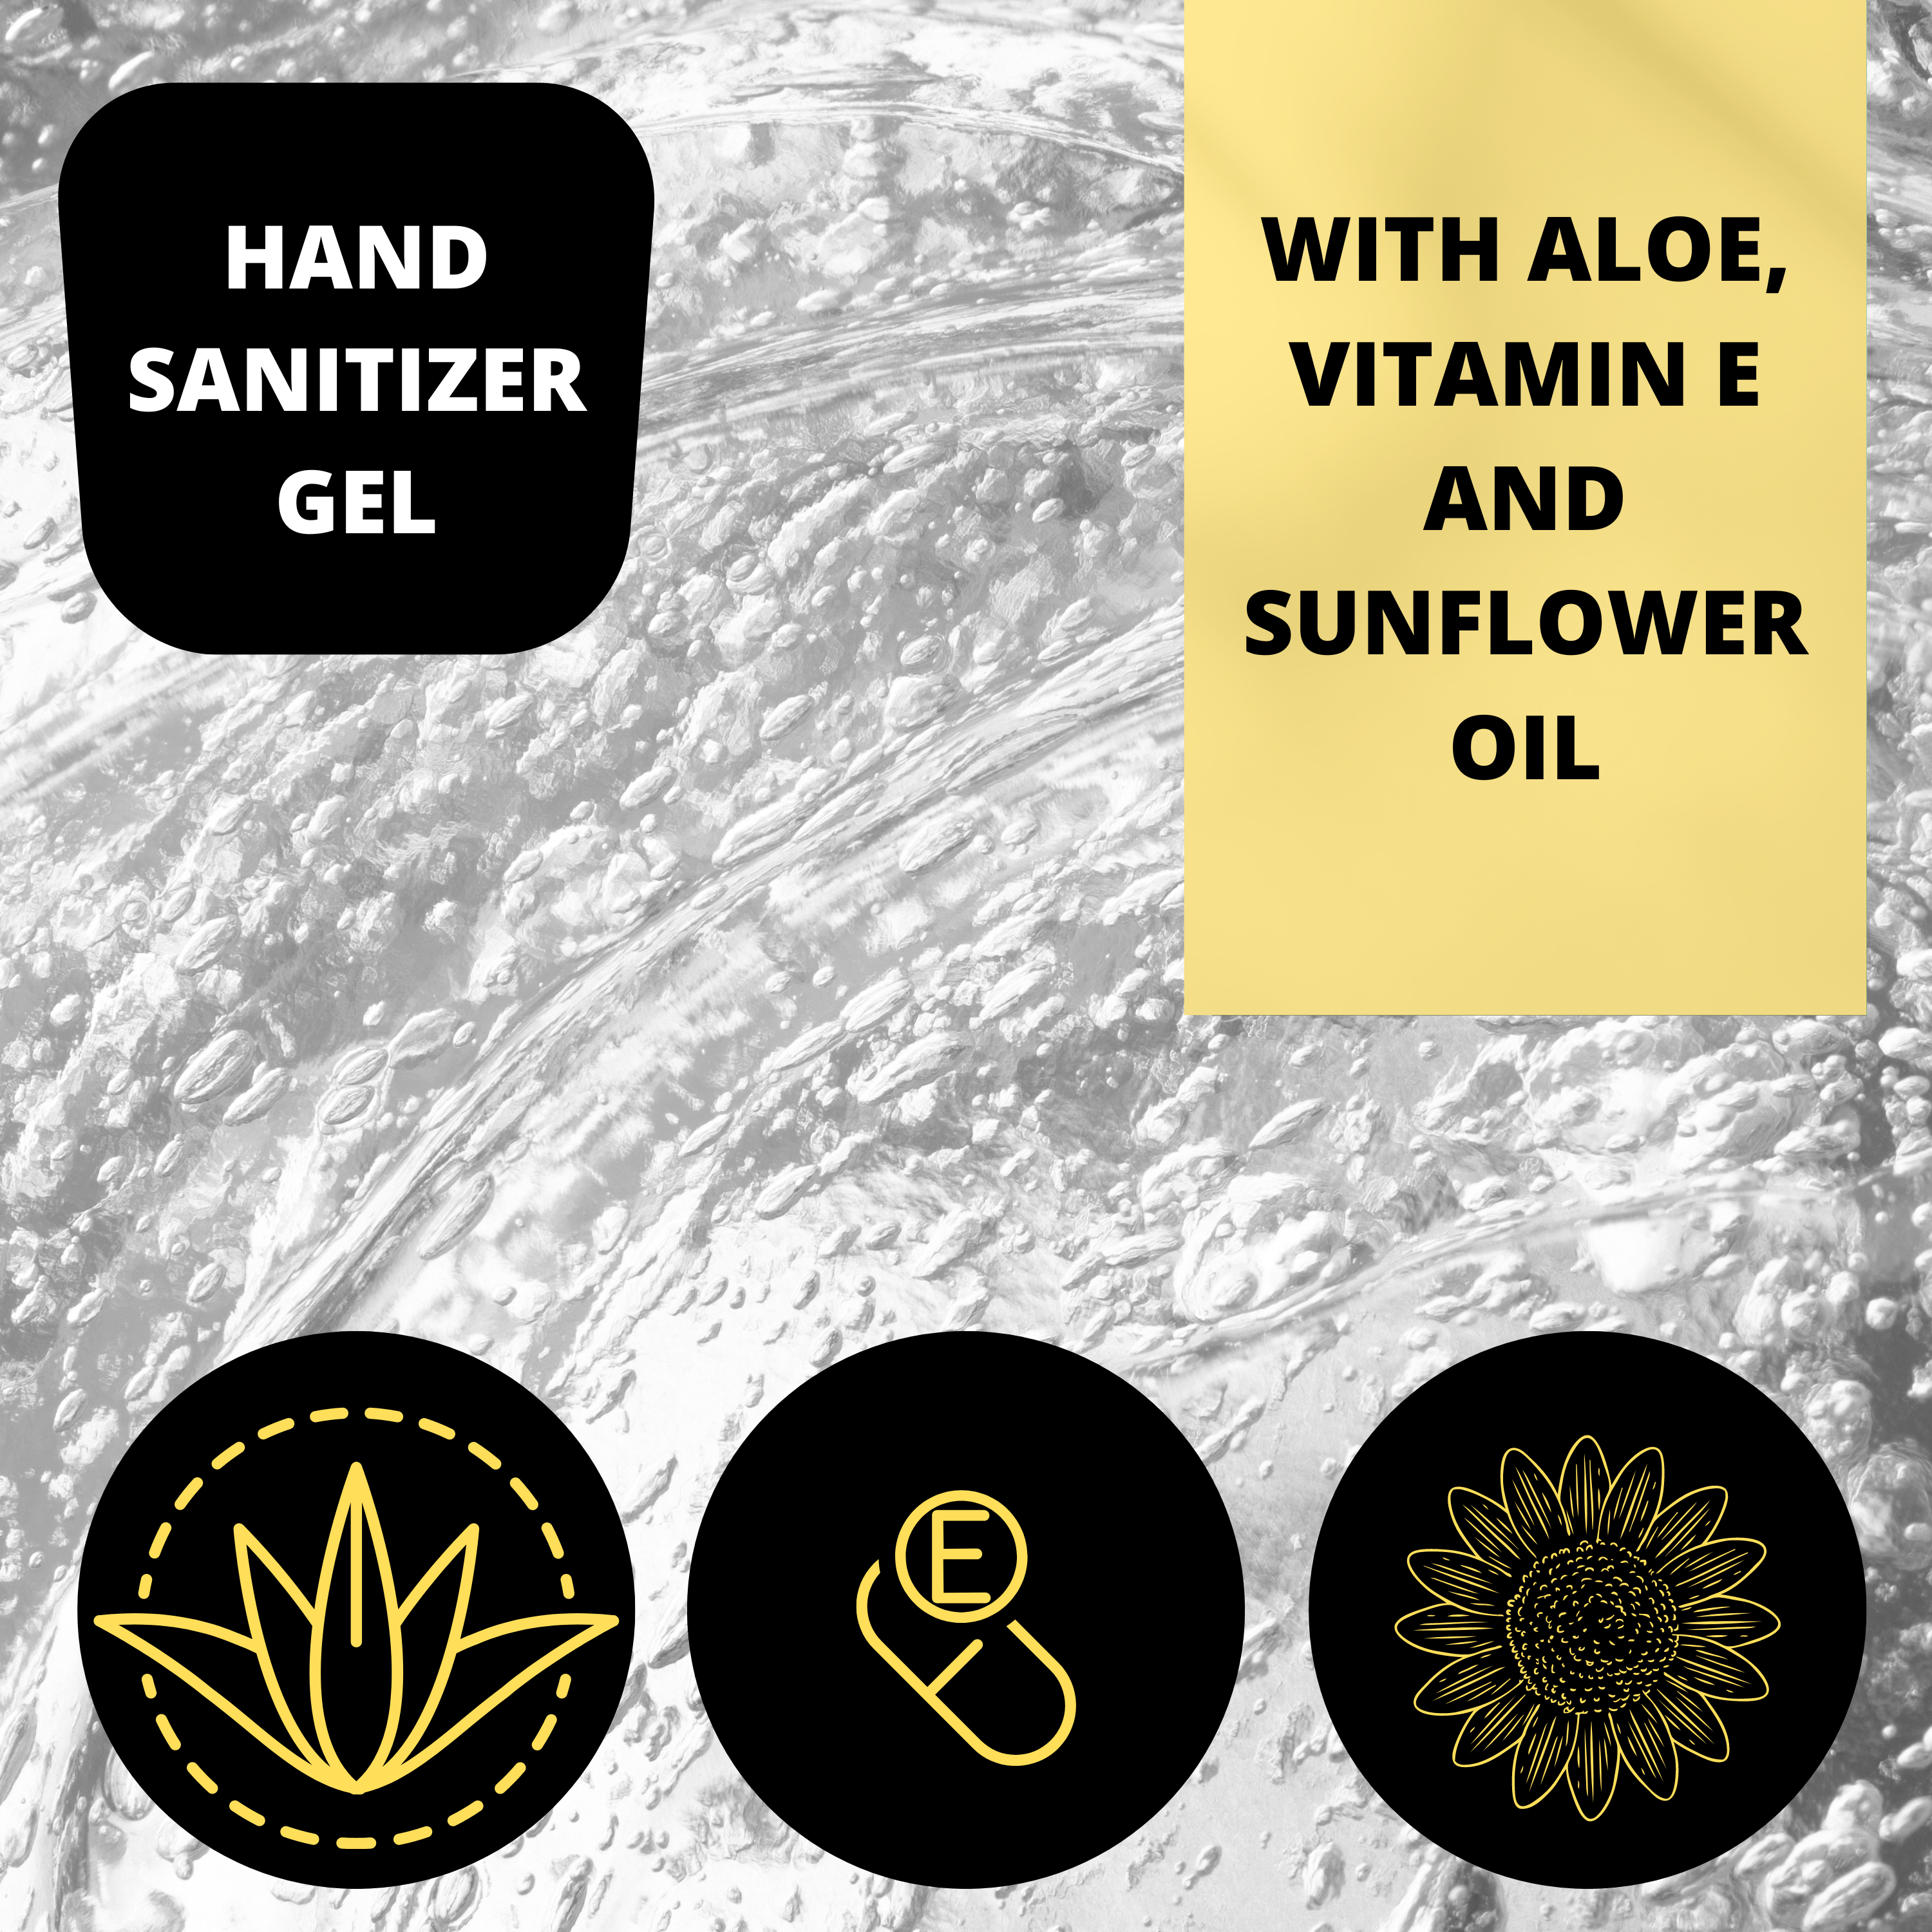 Black Canyon Lemongrass & Clove Scented Hand Sanitizer Gel